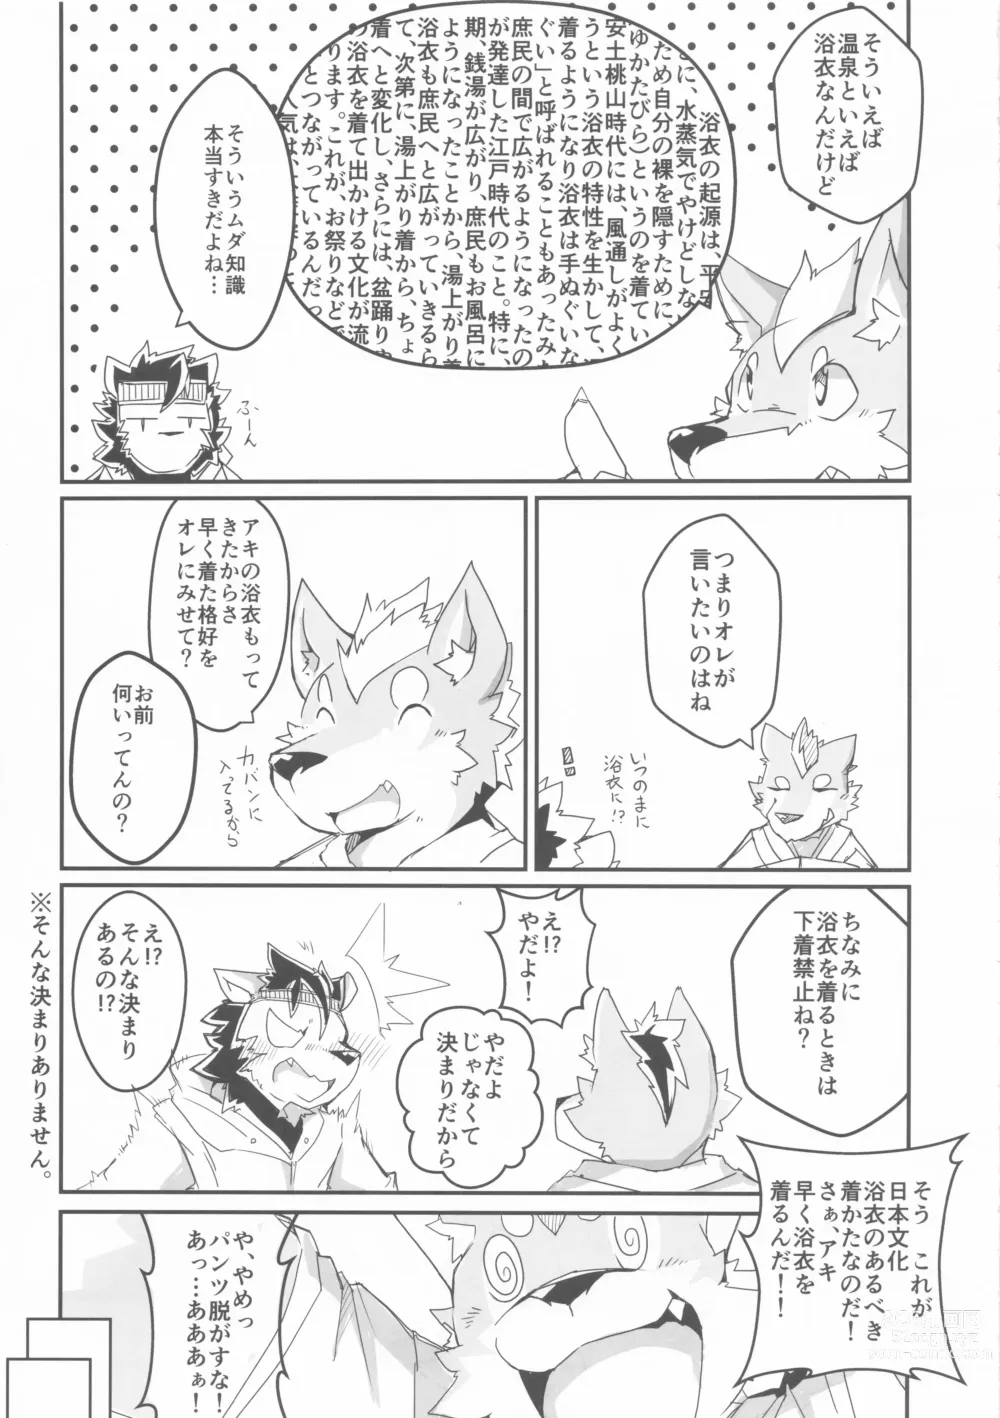 Page 66 of doujinshi Furo Hon!